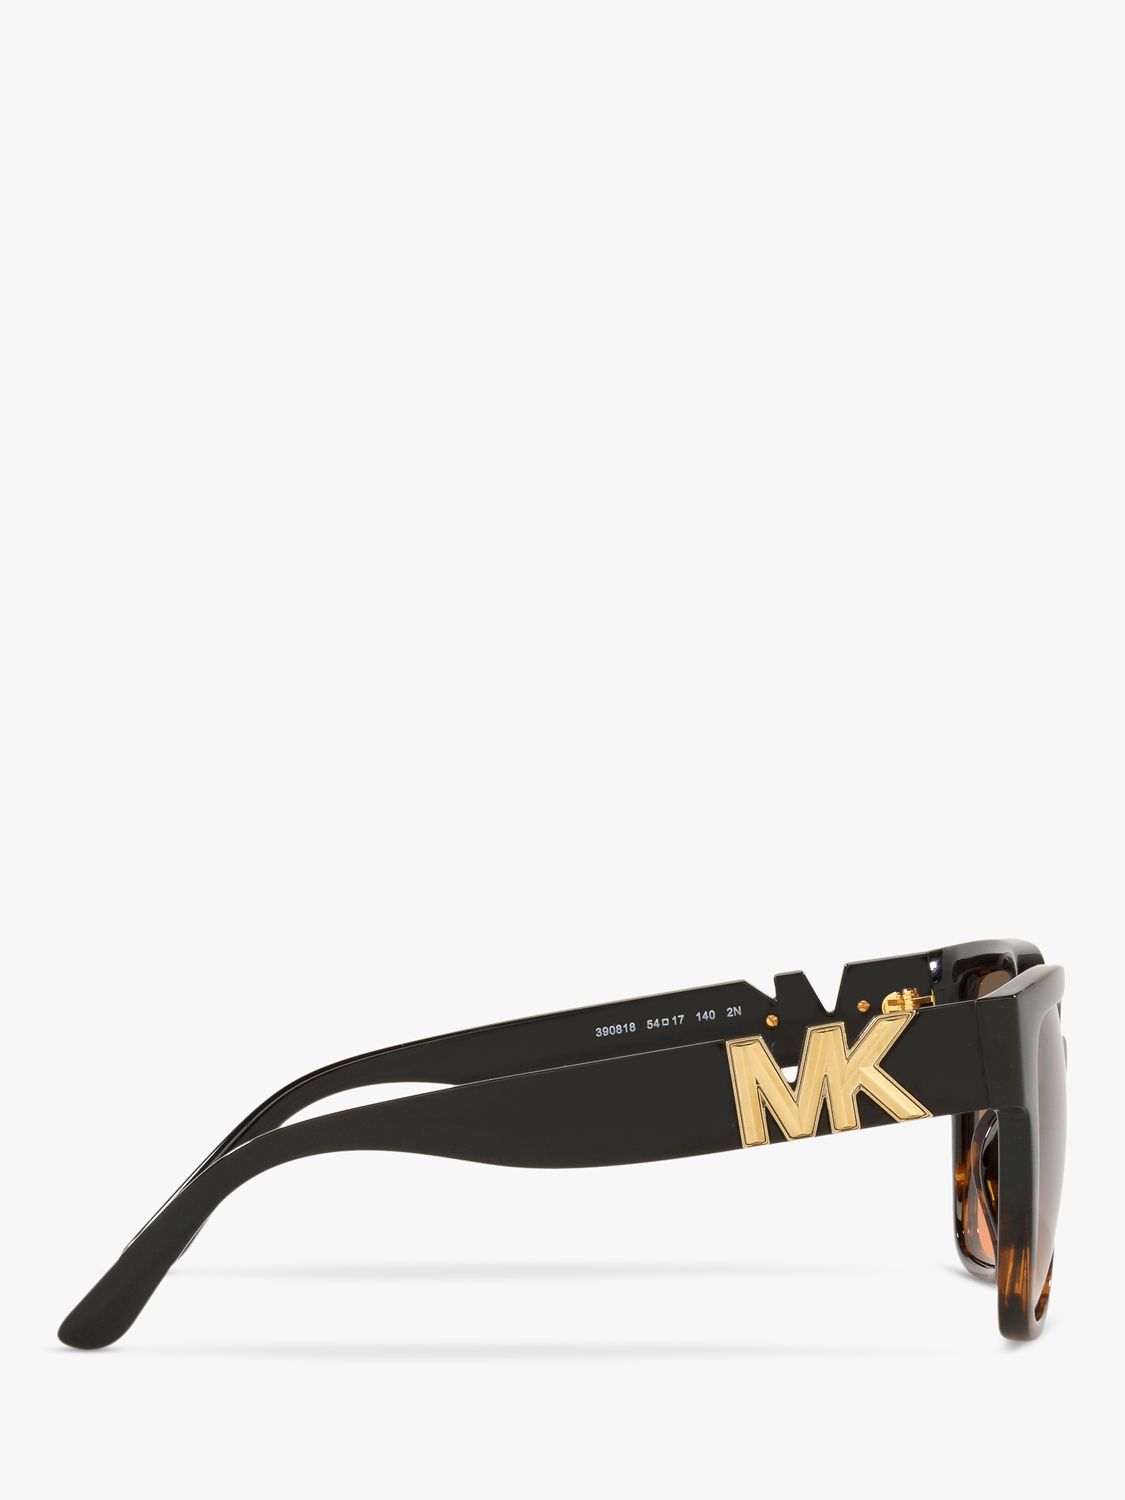 Michael Kors Mk2170u Women S Karlie Square Sunglasses Black Dark Tortoise At John Lewis And Partners